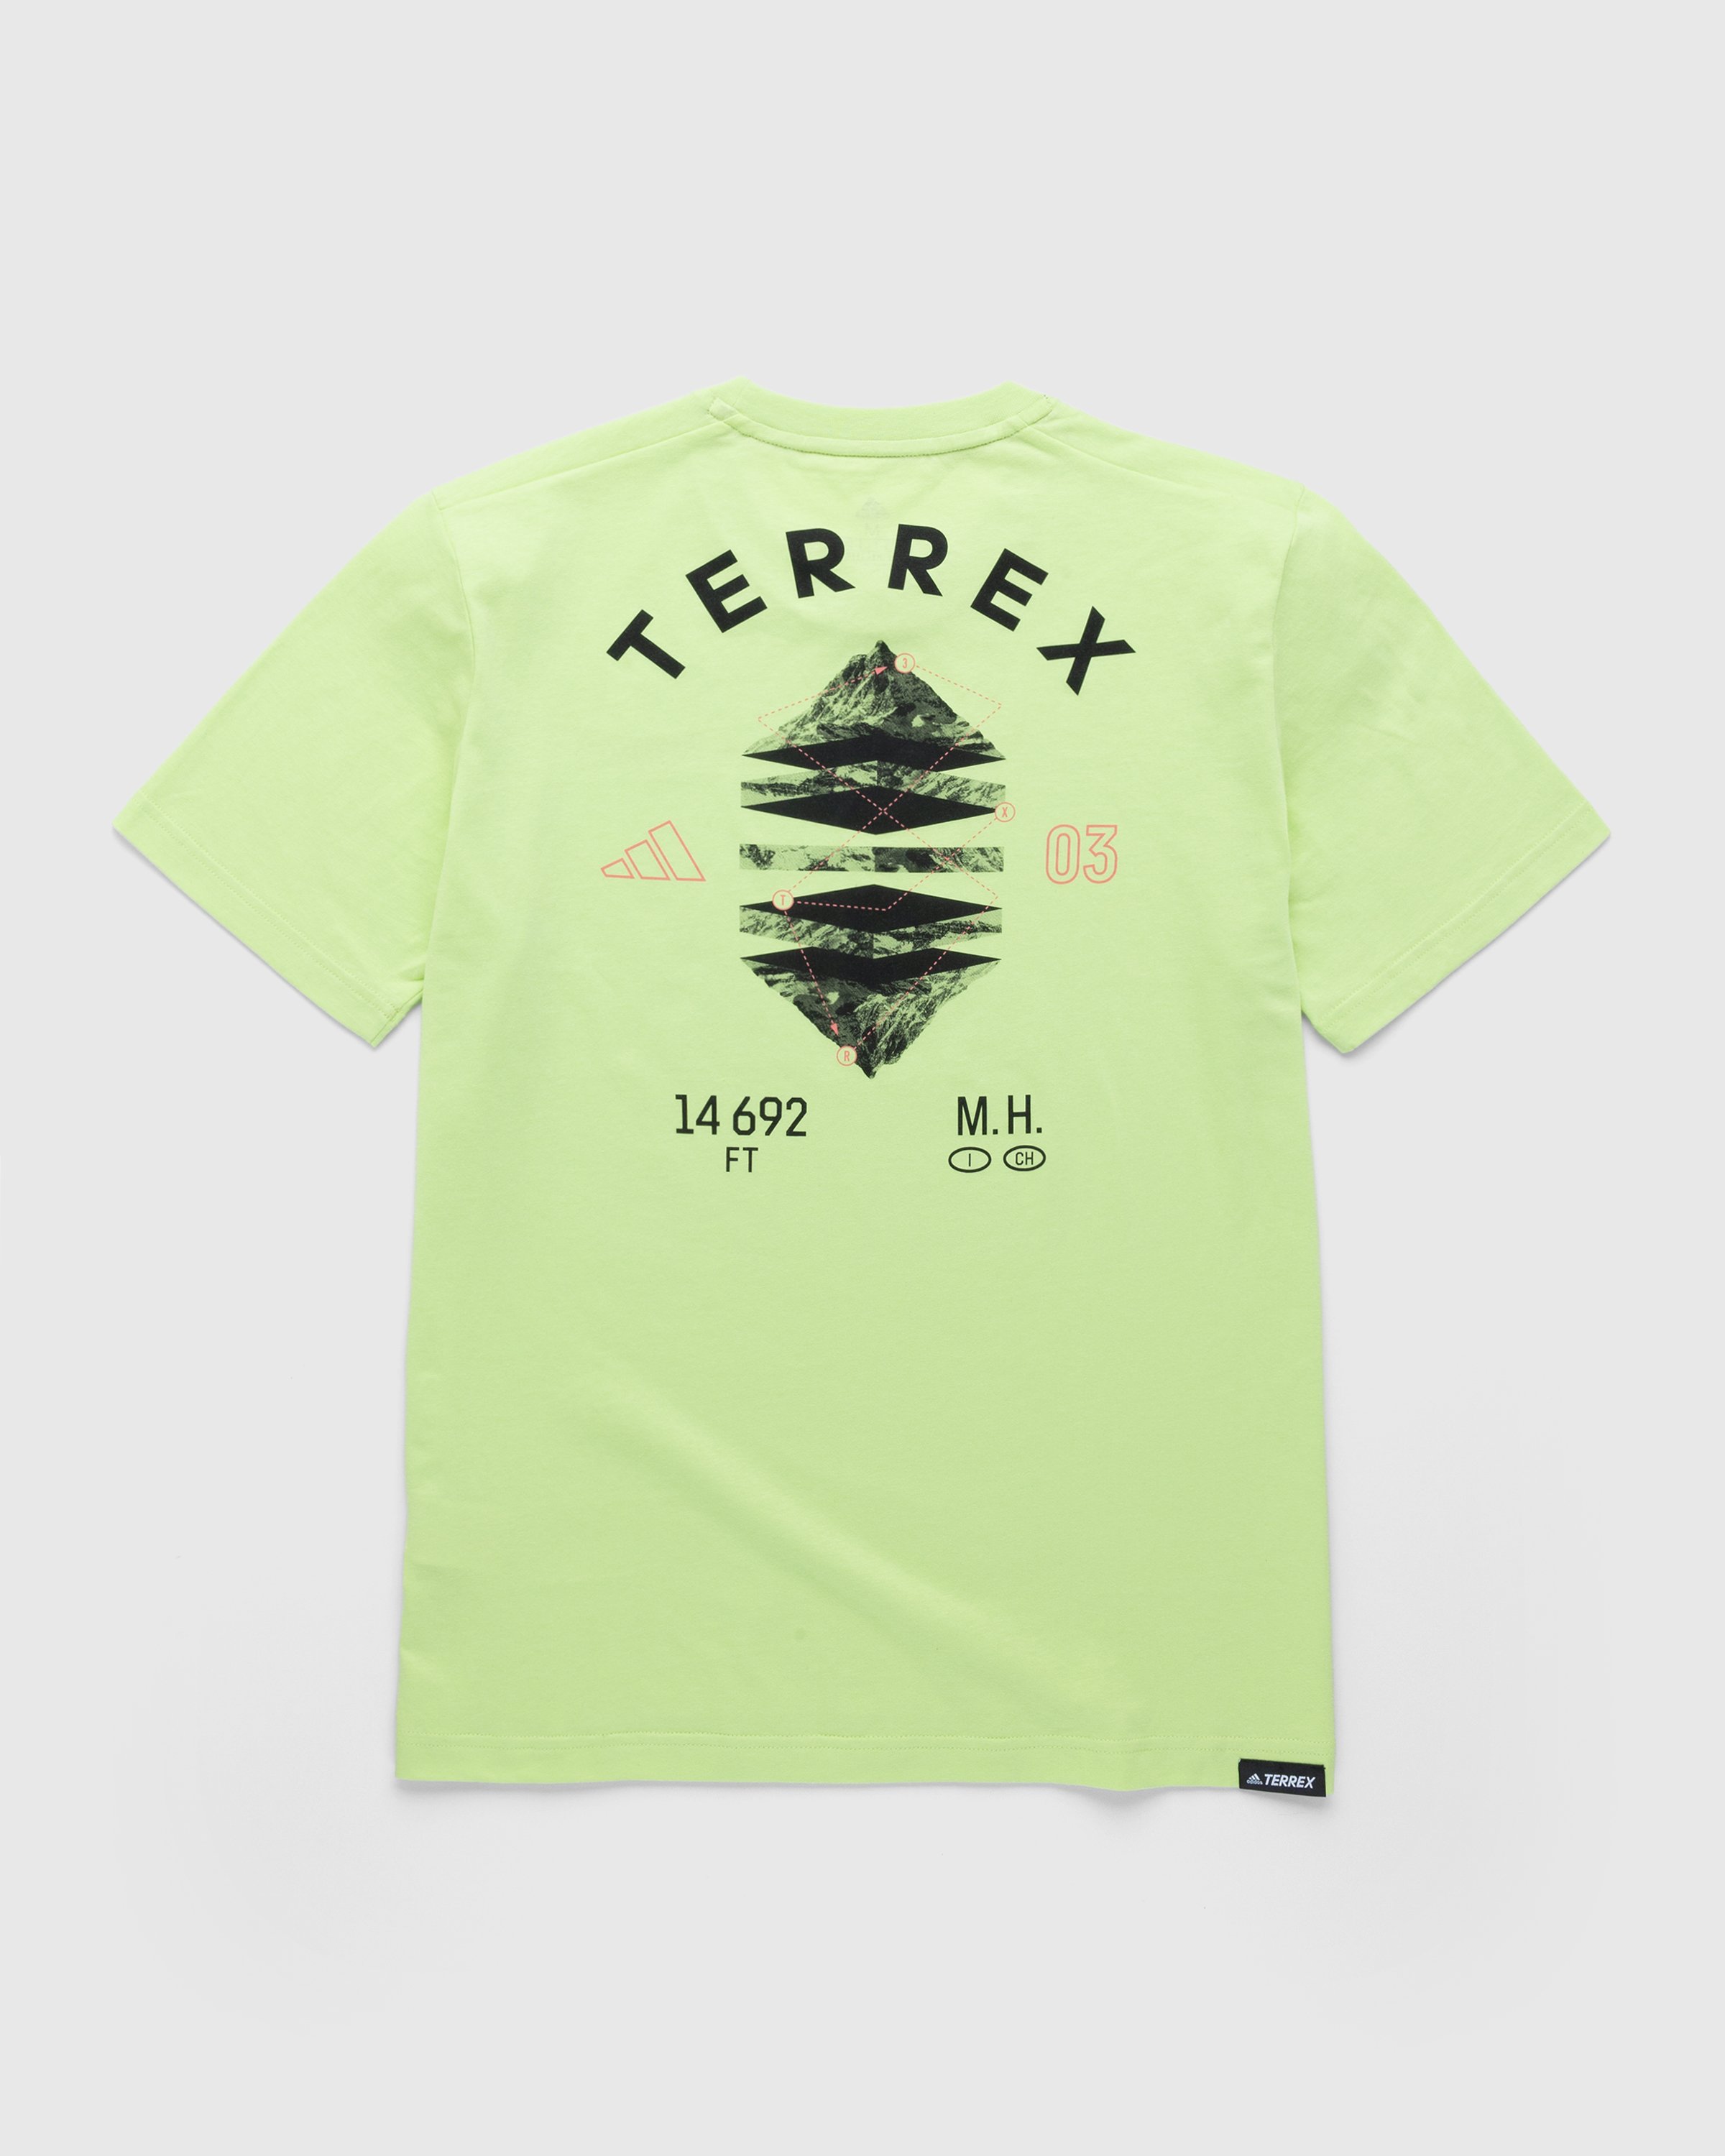 Adidas - Terrex Mountain Landscape T-Shirt Green - Clothing - Green - Image 2